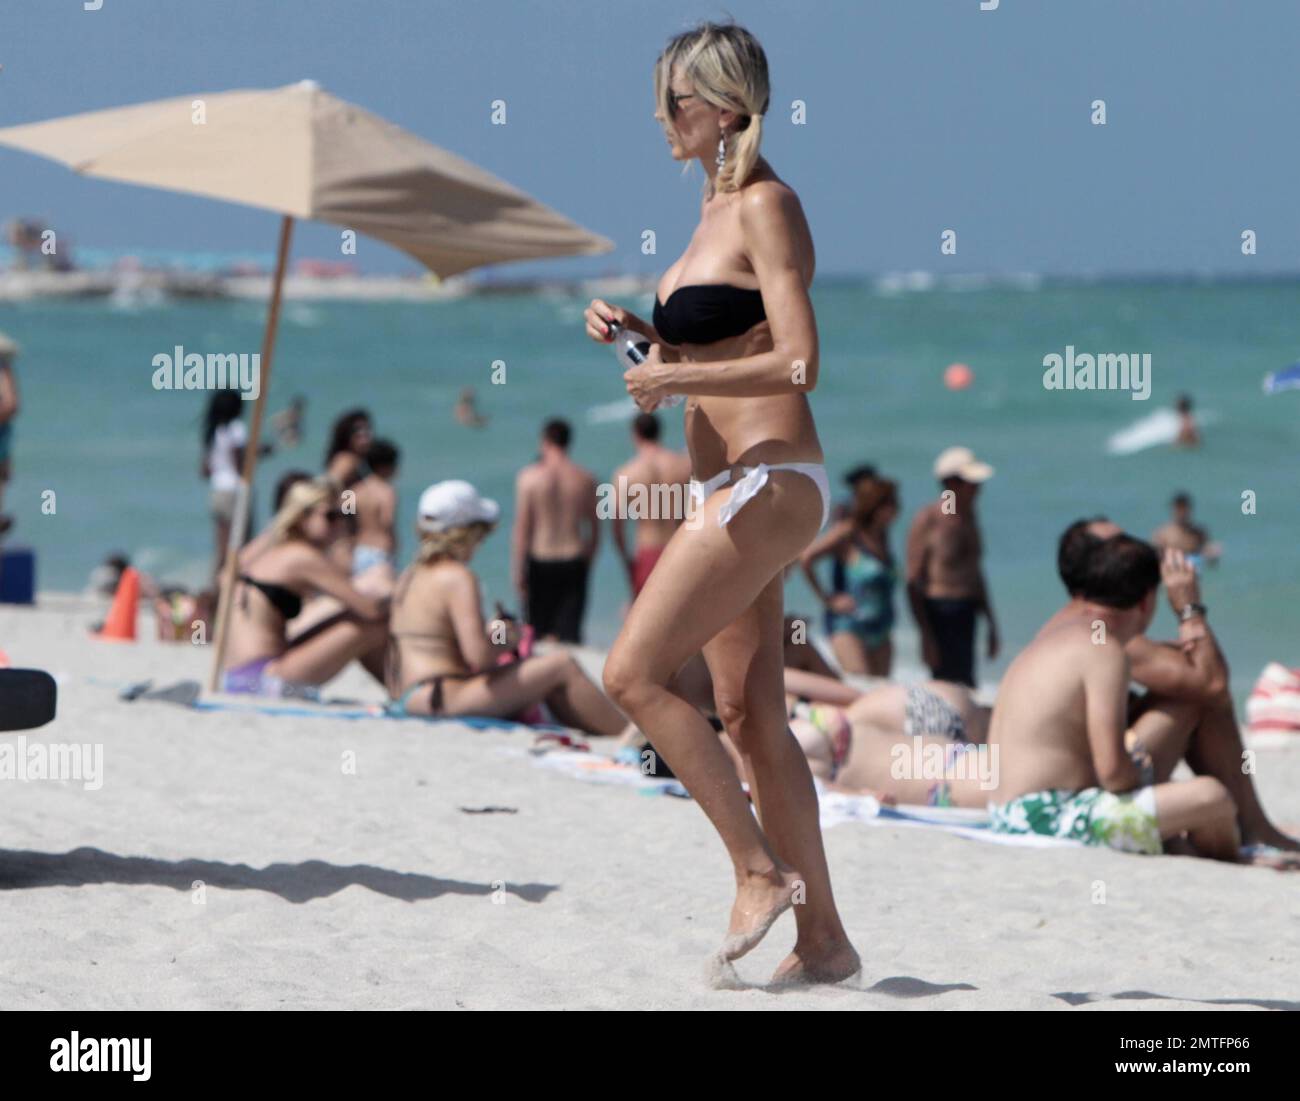 Italian actress Rita Rusic seen relaxing in Miami Beach wearing a skimpy bikini. Miami, FL. 21 August 2011. Stock Photo